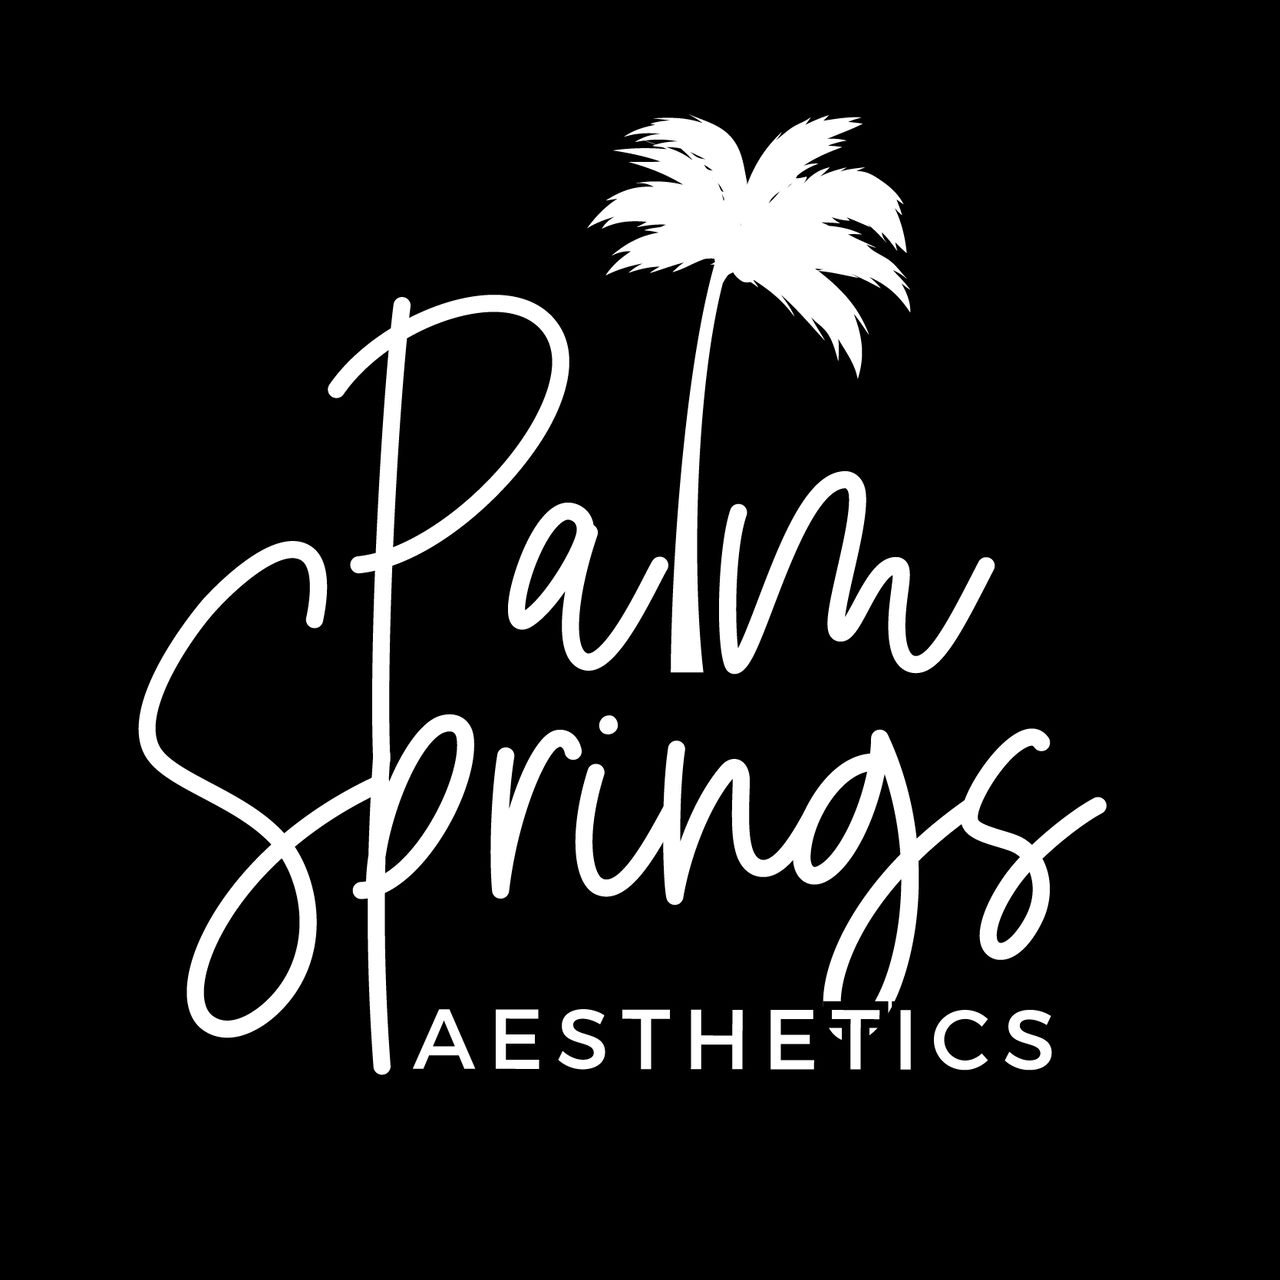 Palm Springs Aesthetics logo